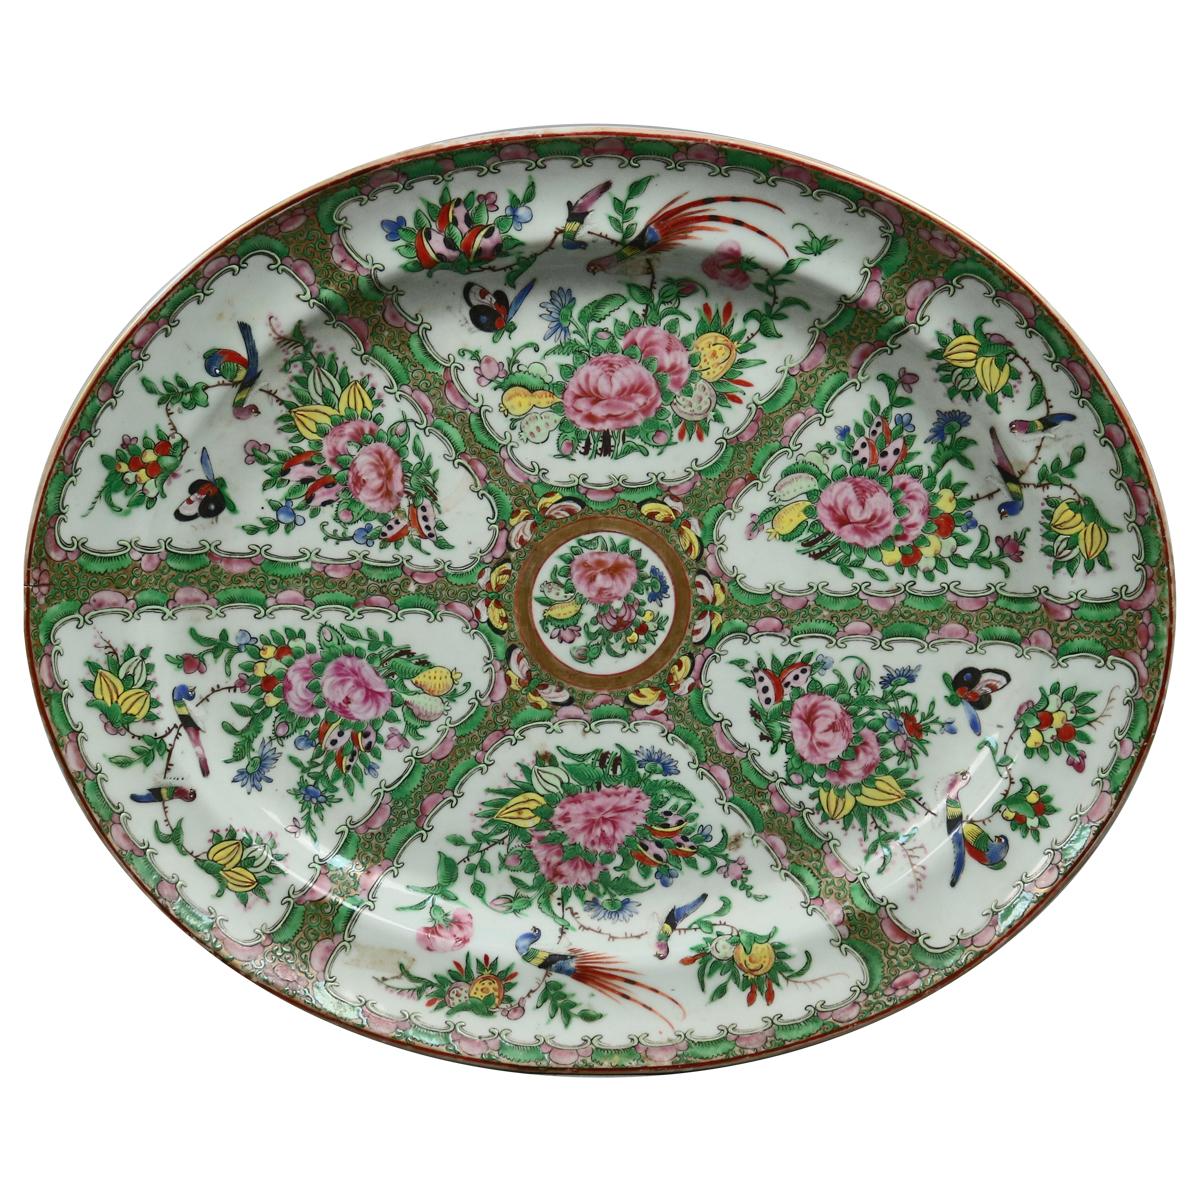 Chinese Rose Medallion Enamel and Gilt Decorated Porcelain Platter, circa 1890